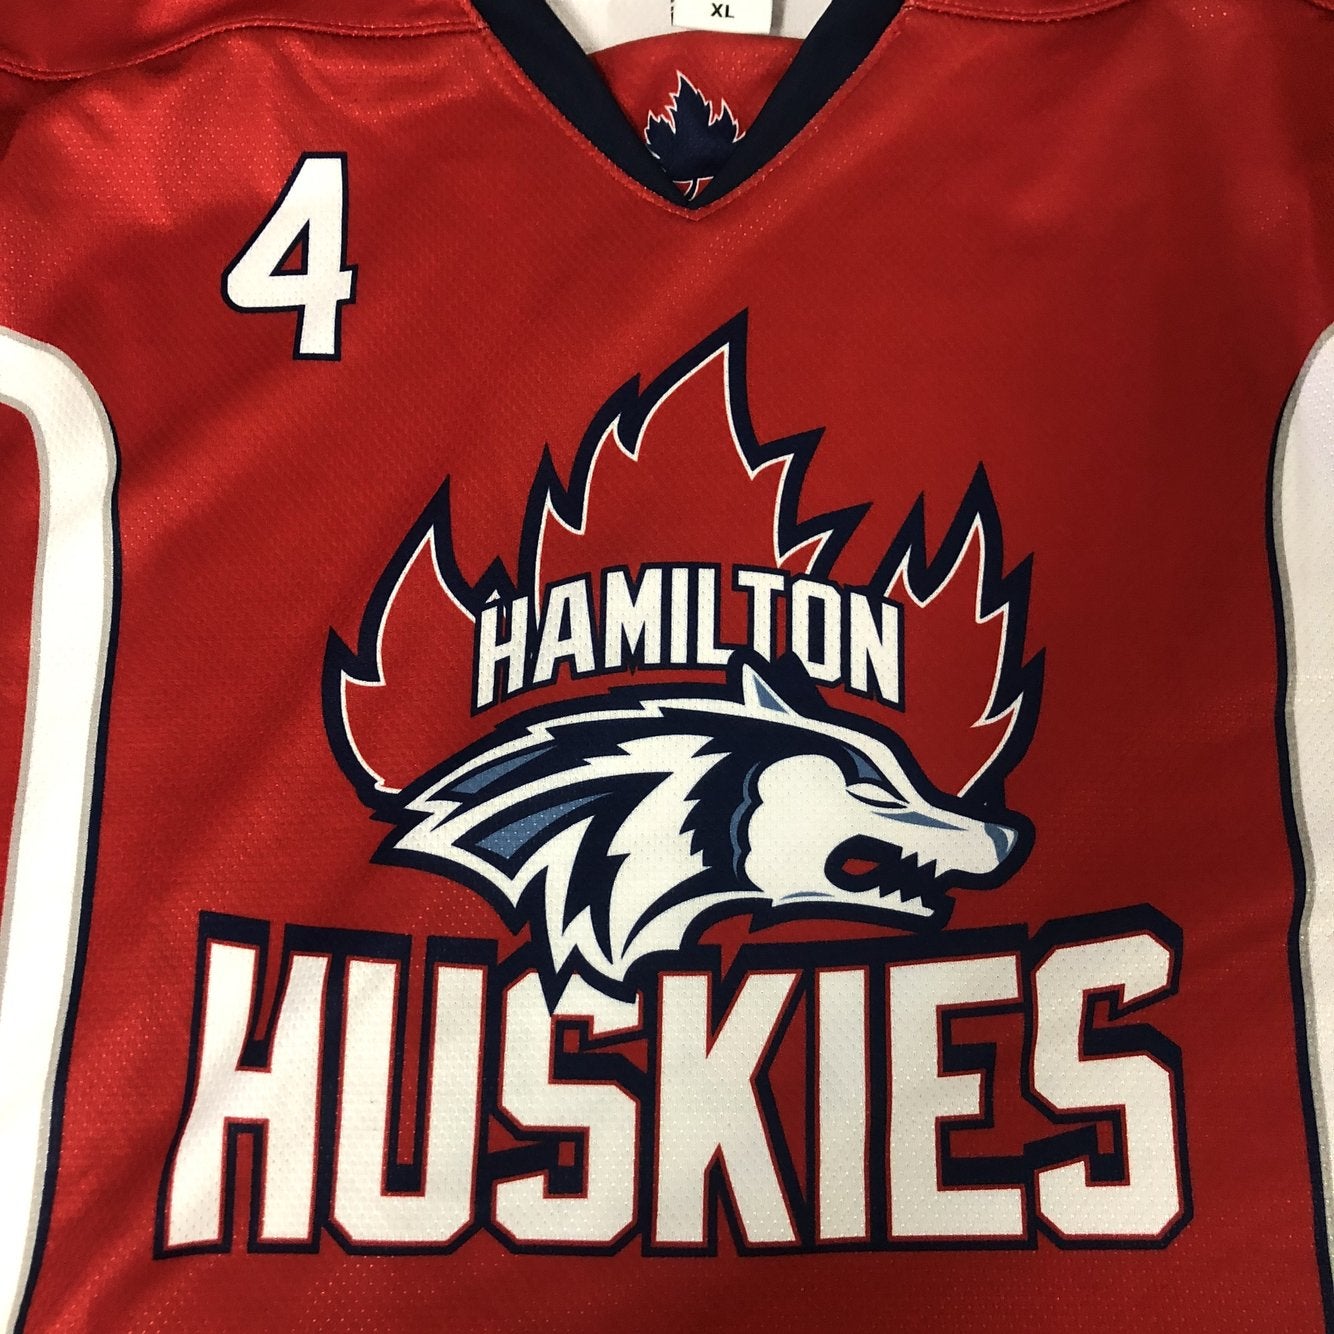 Hamilton Huskies men's XL hockey jersey